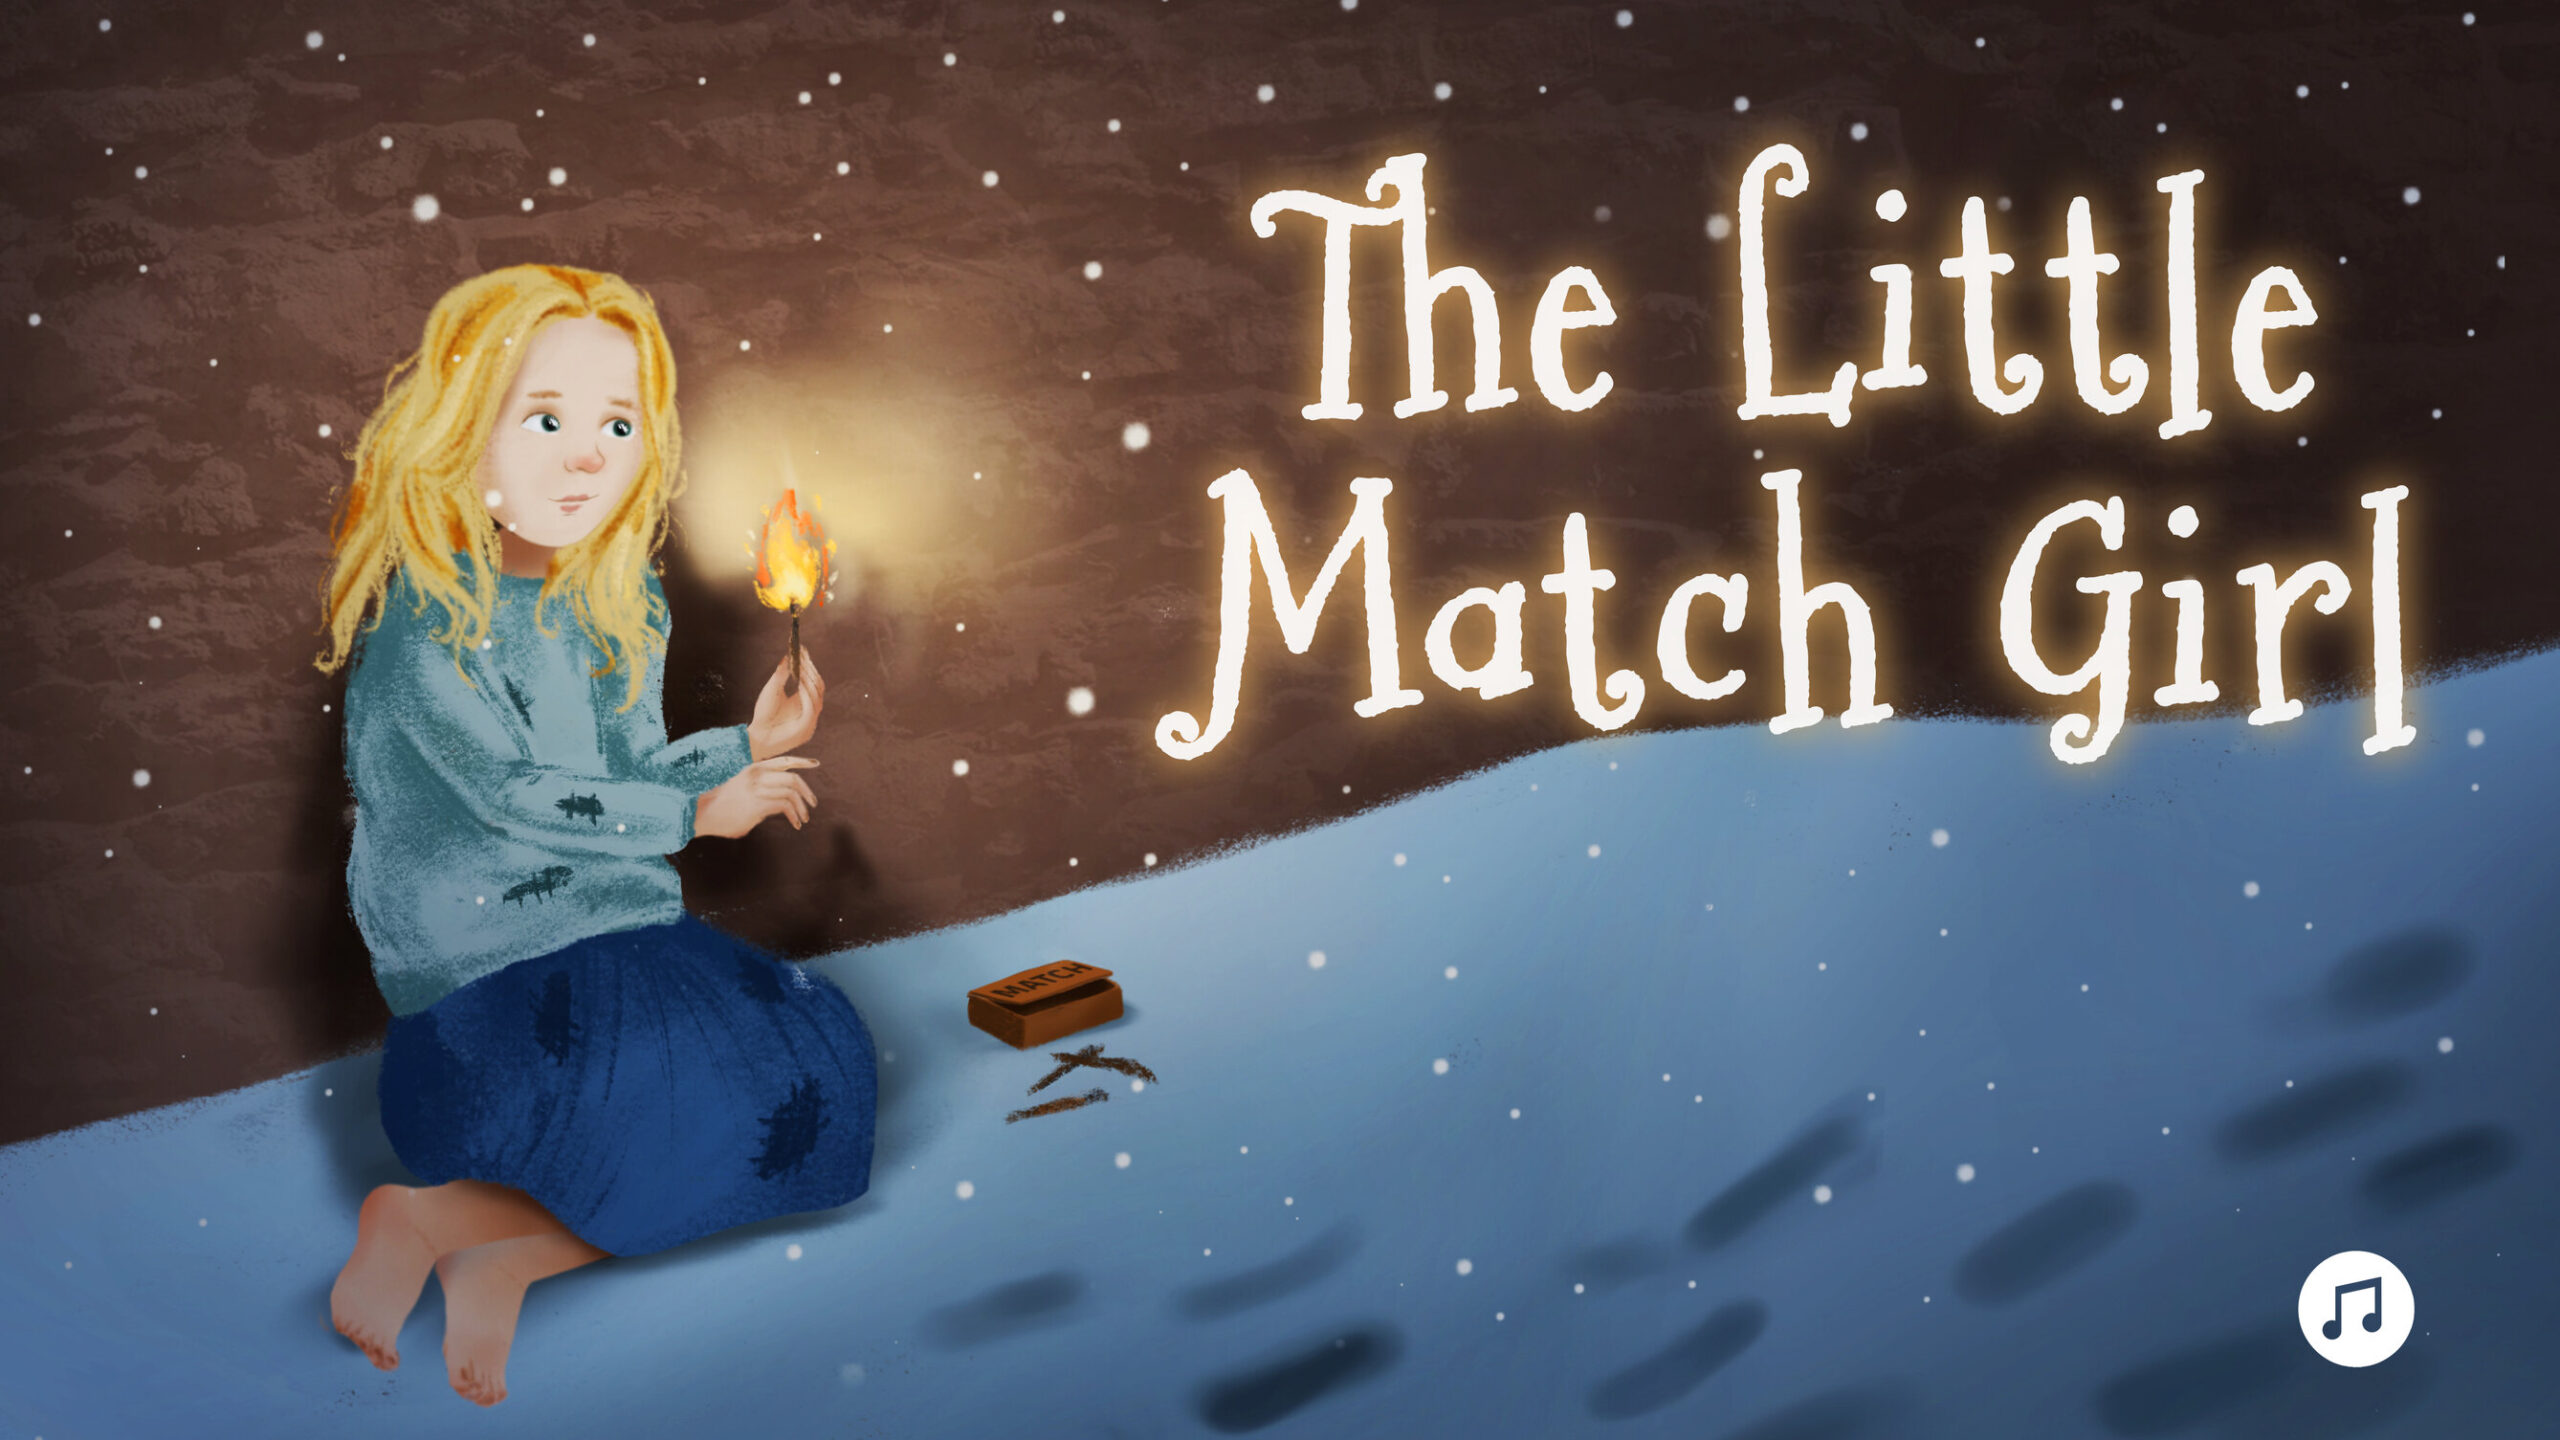 The little match girl Short story